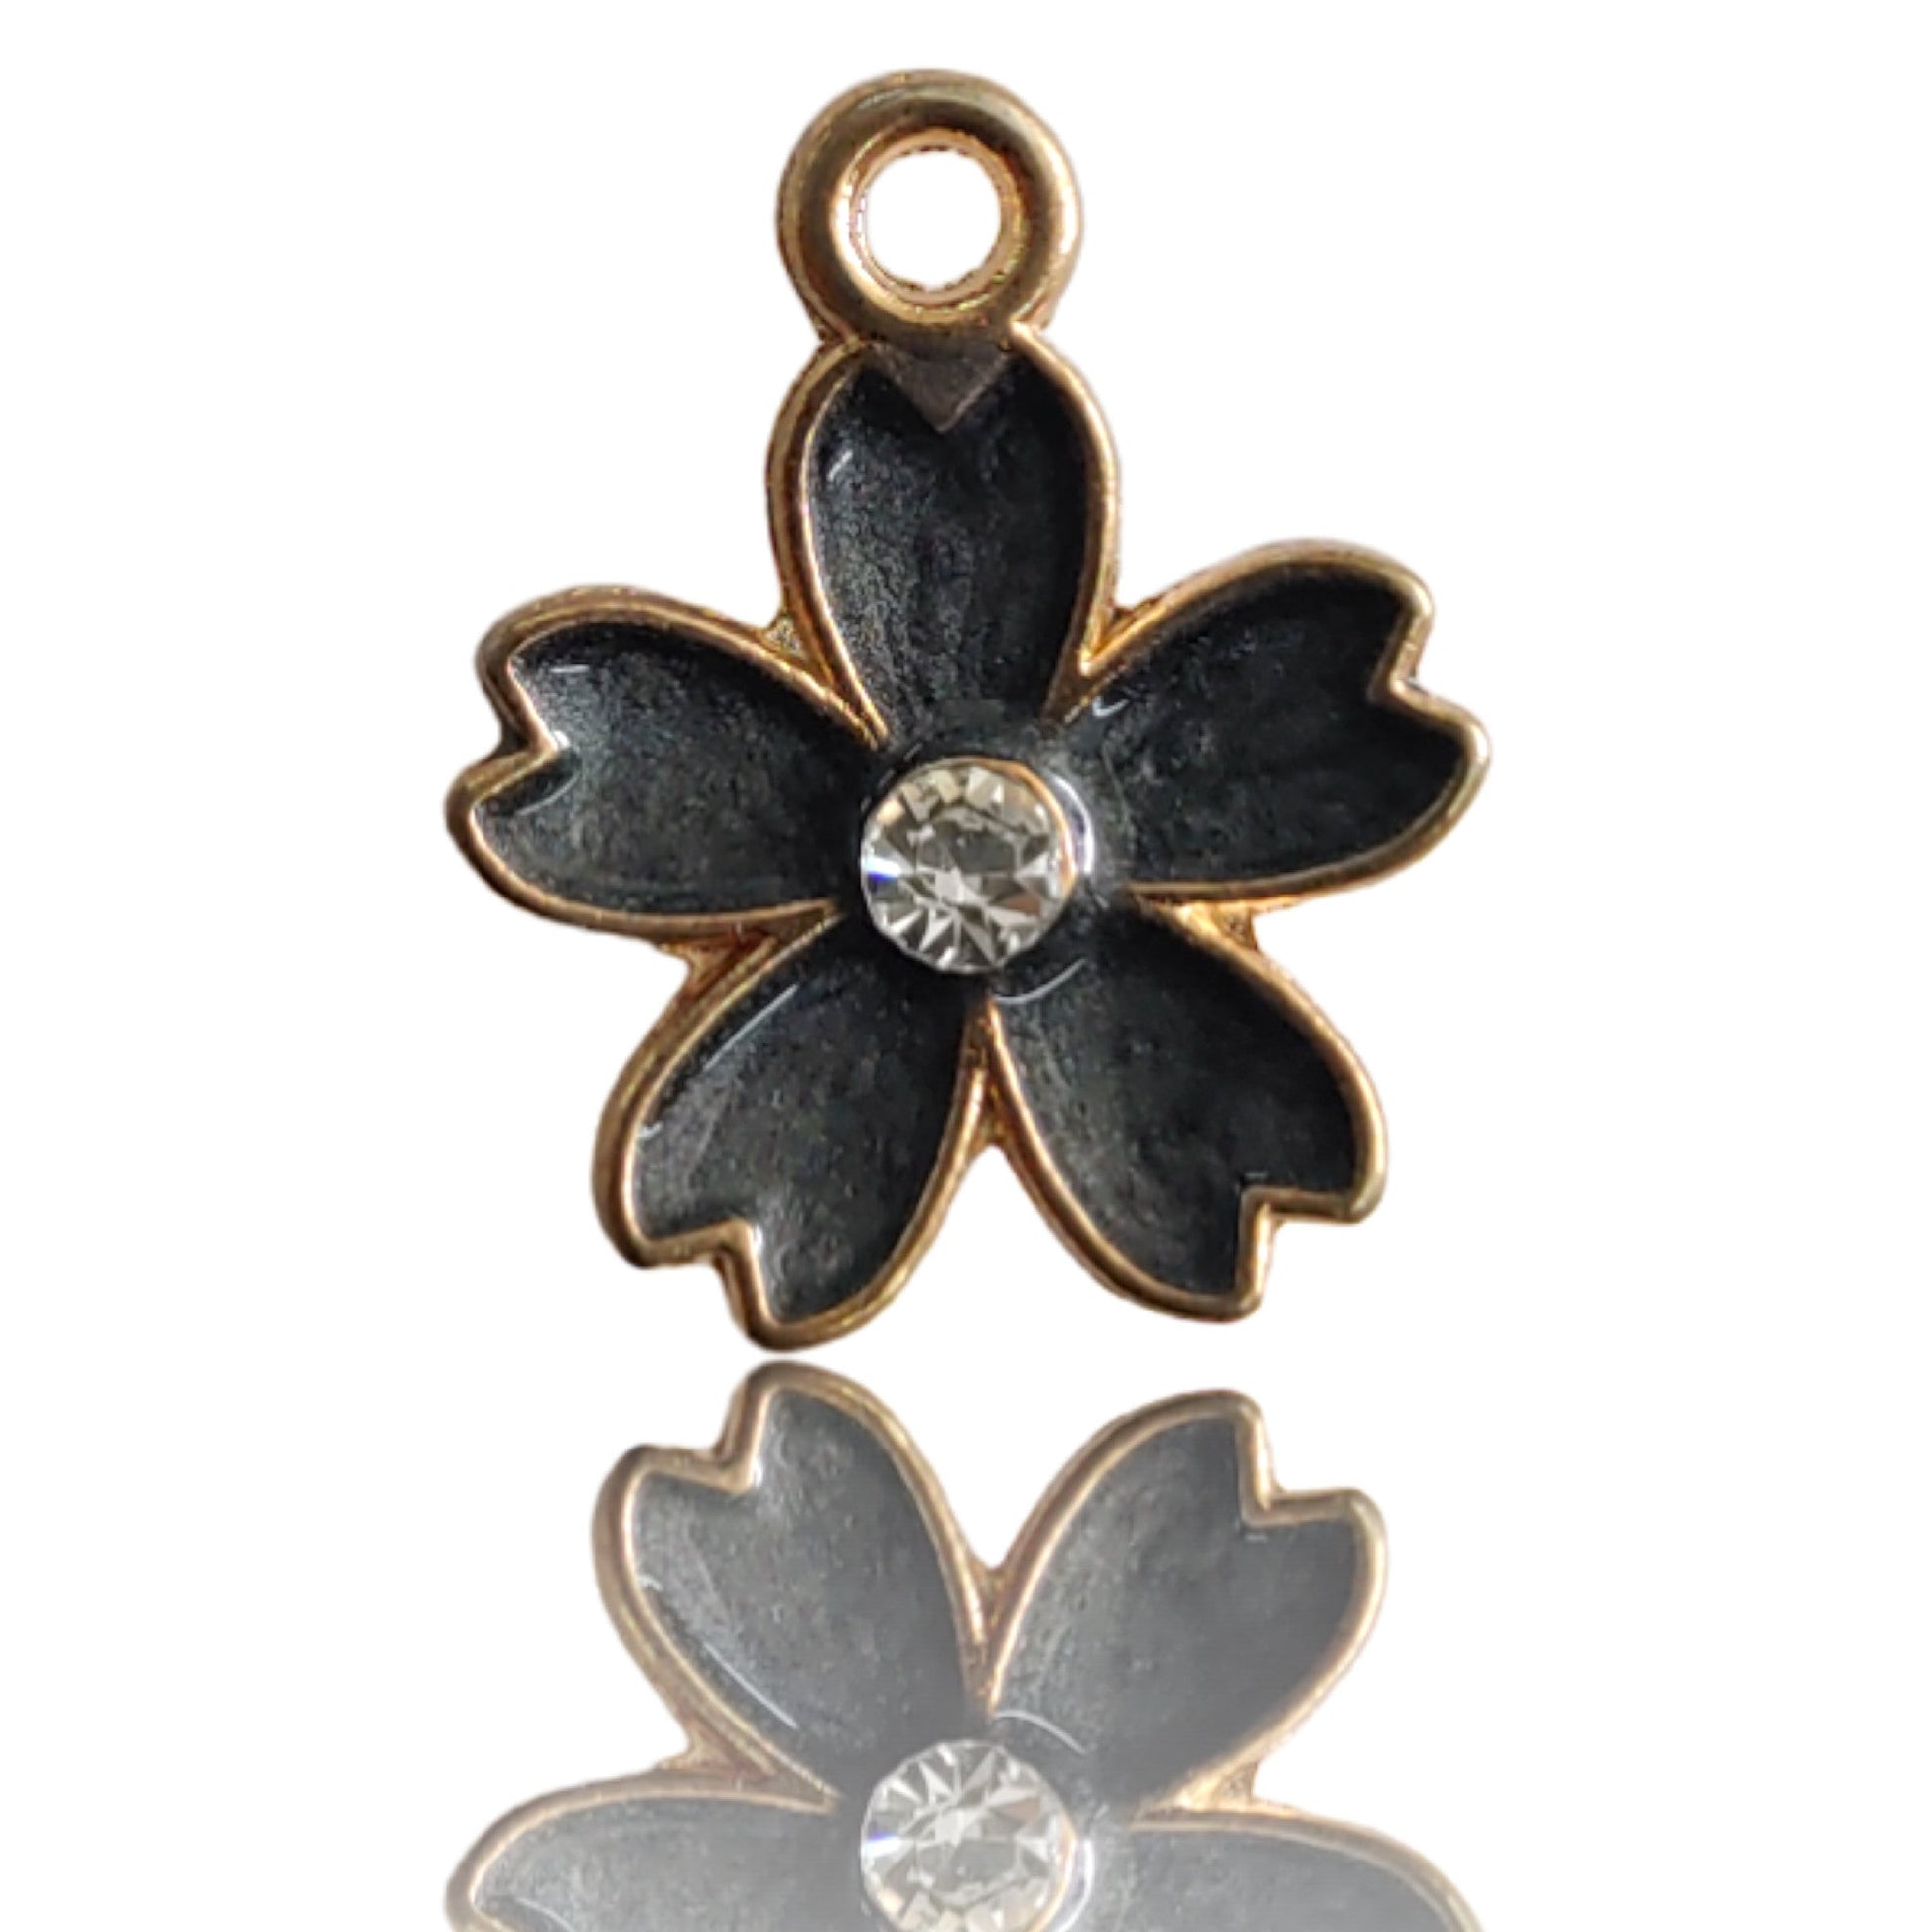 Indian Petals 50 Pcs Floral Shape Metal Motif Pendant for Rakhi, Jewelry designing and Craft Making or Decor